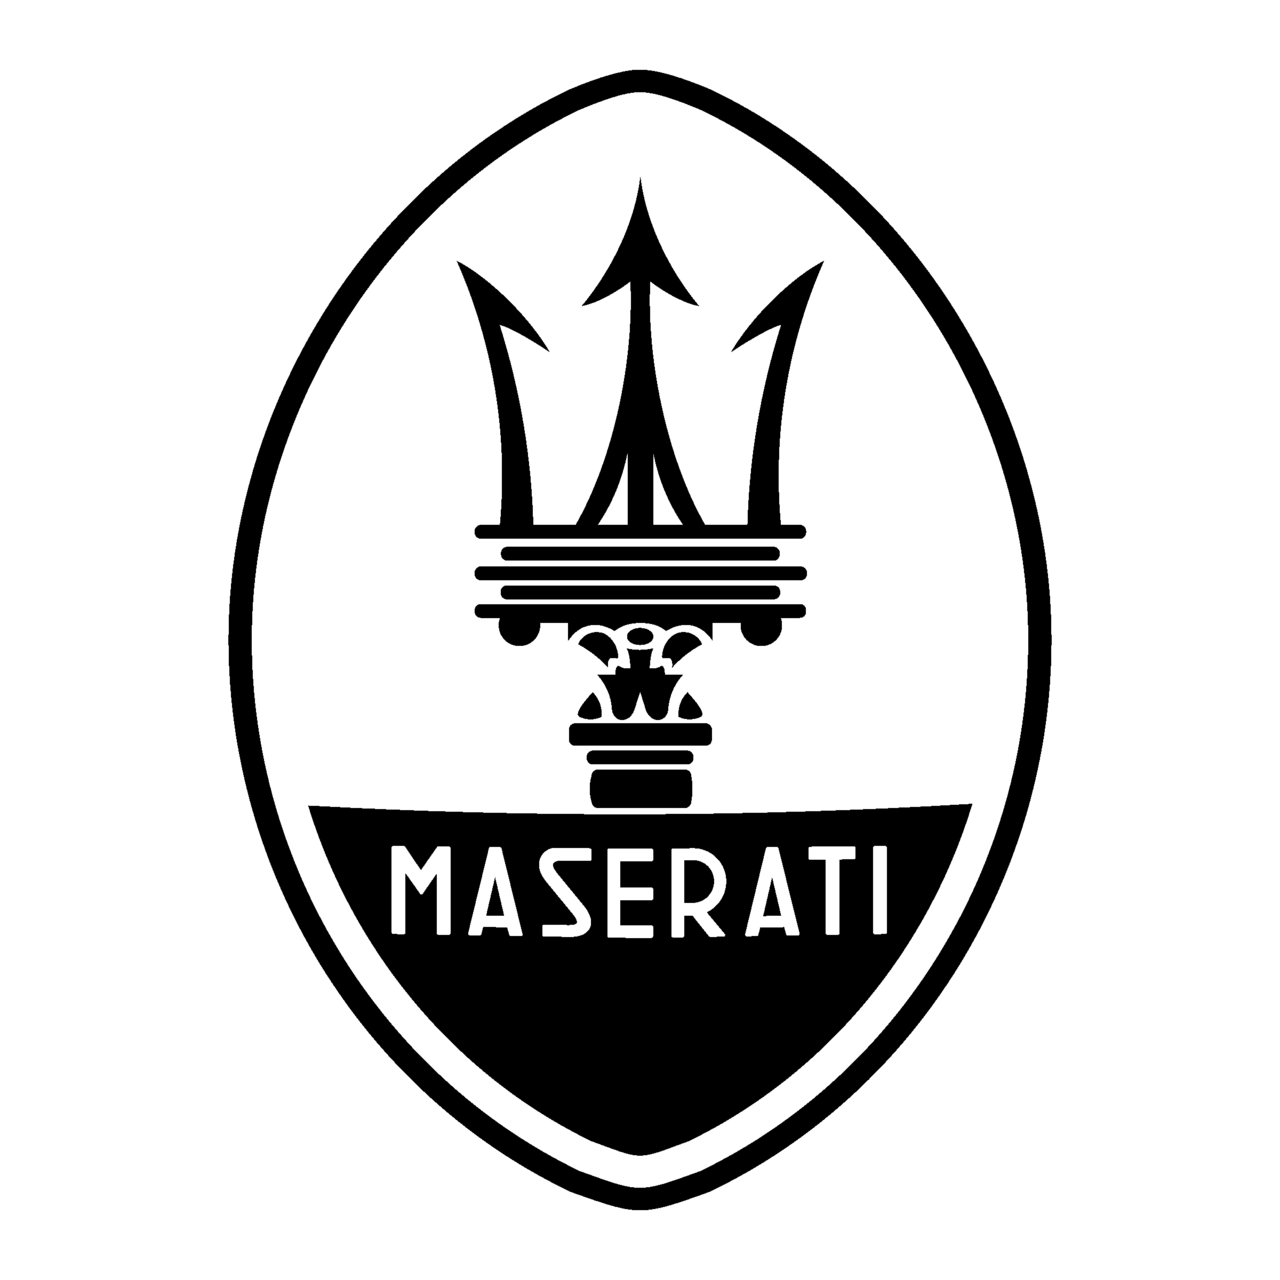 maserati-logo-black-and-white-2.png